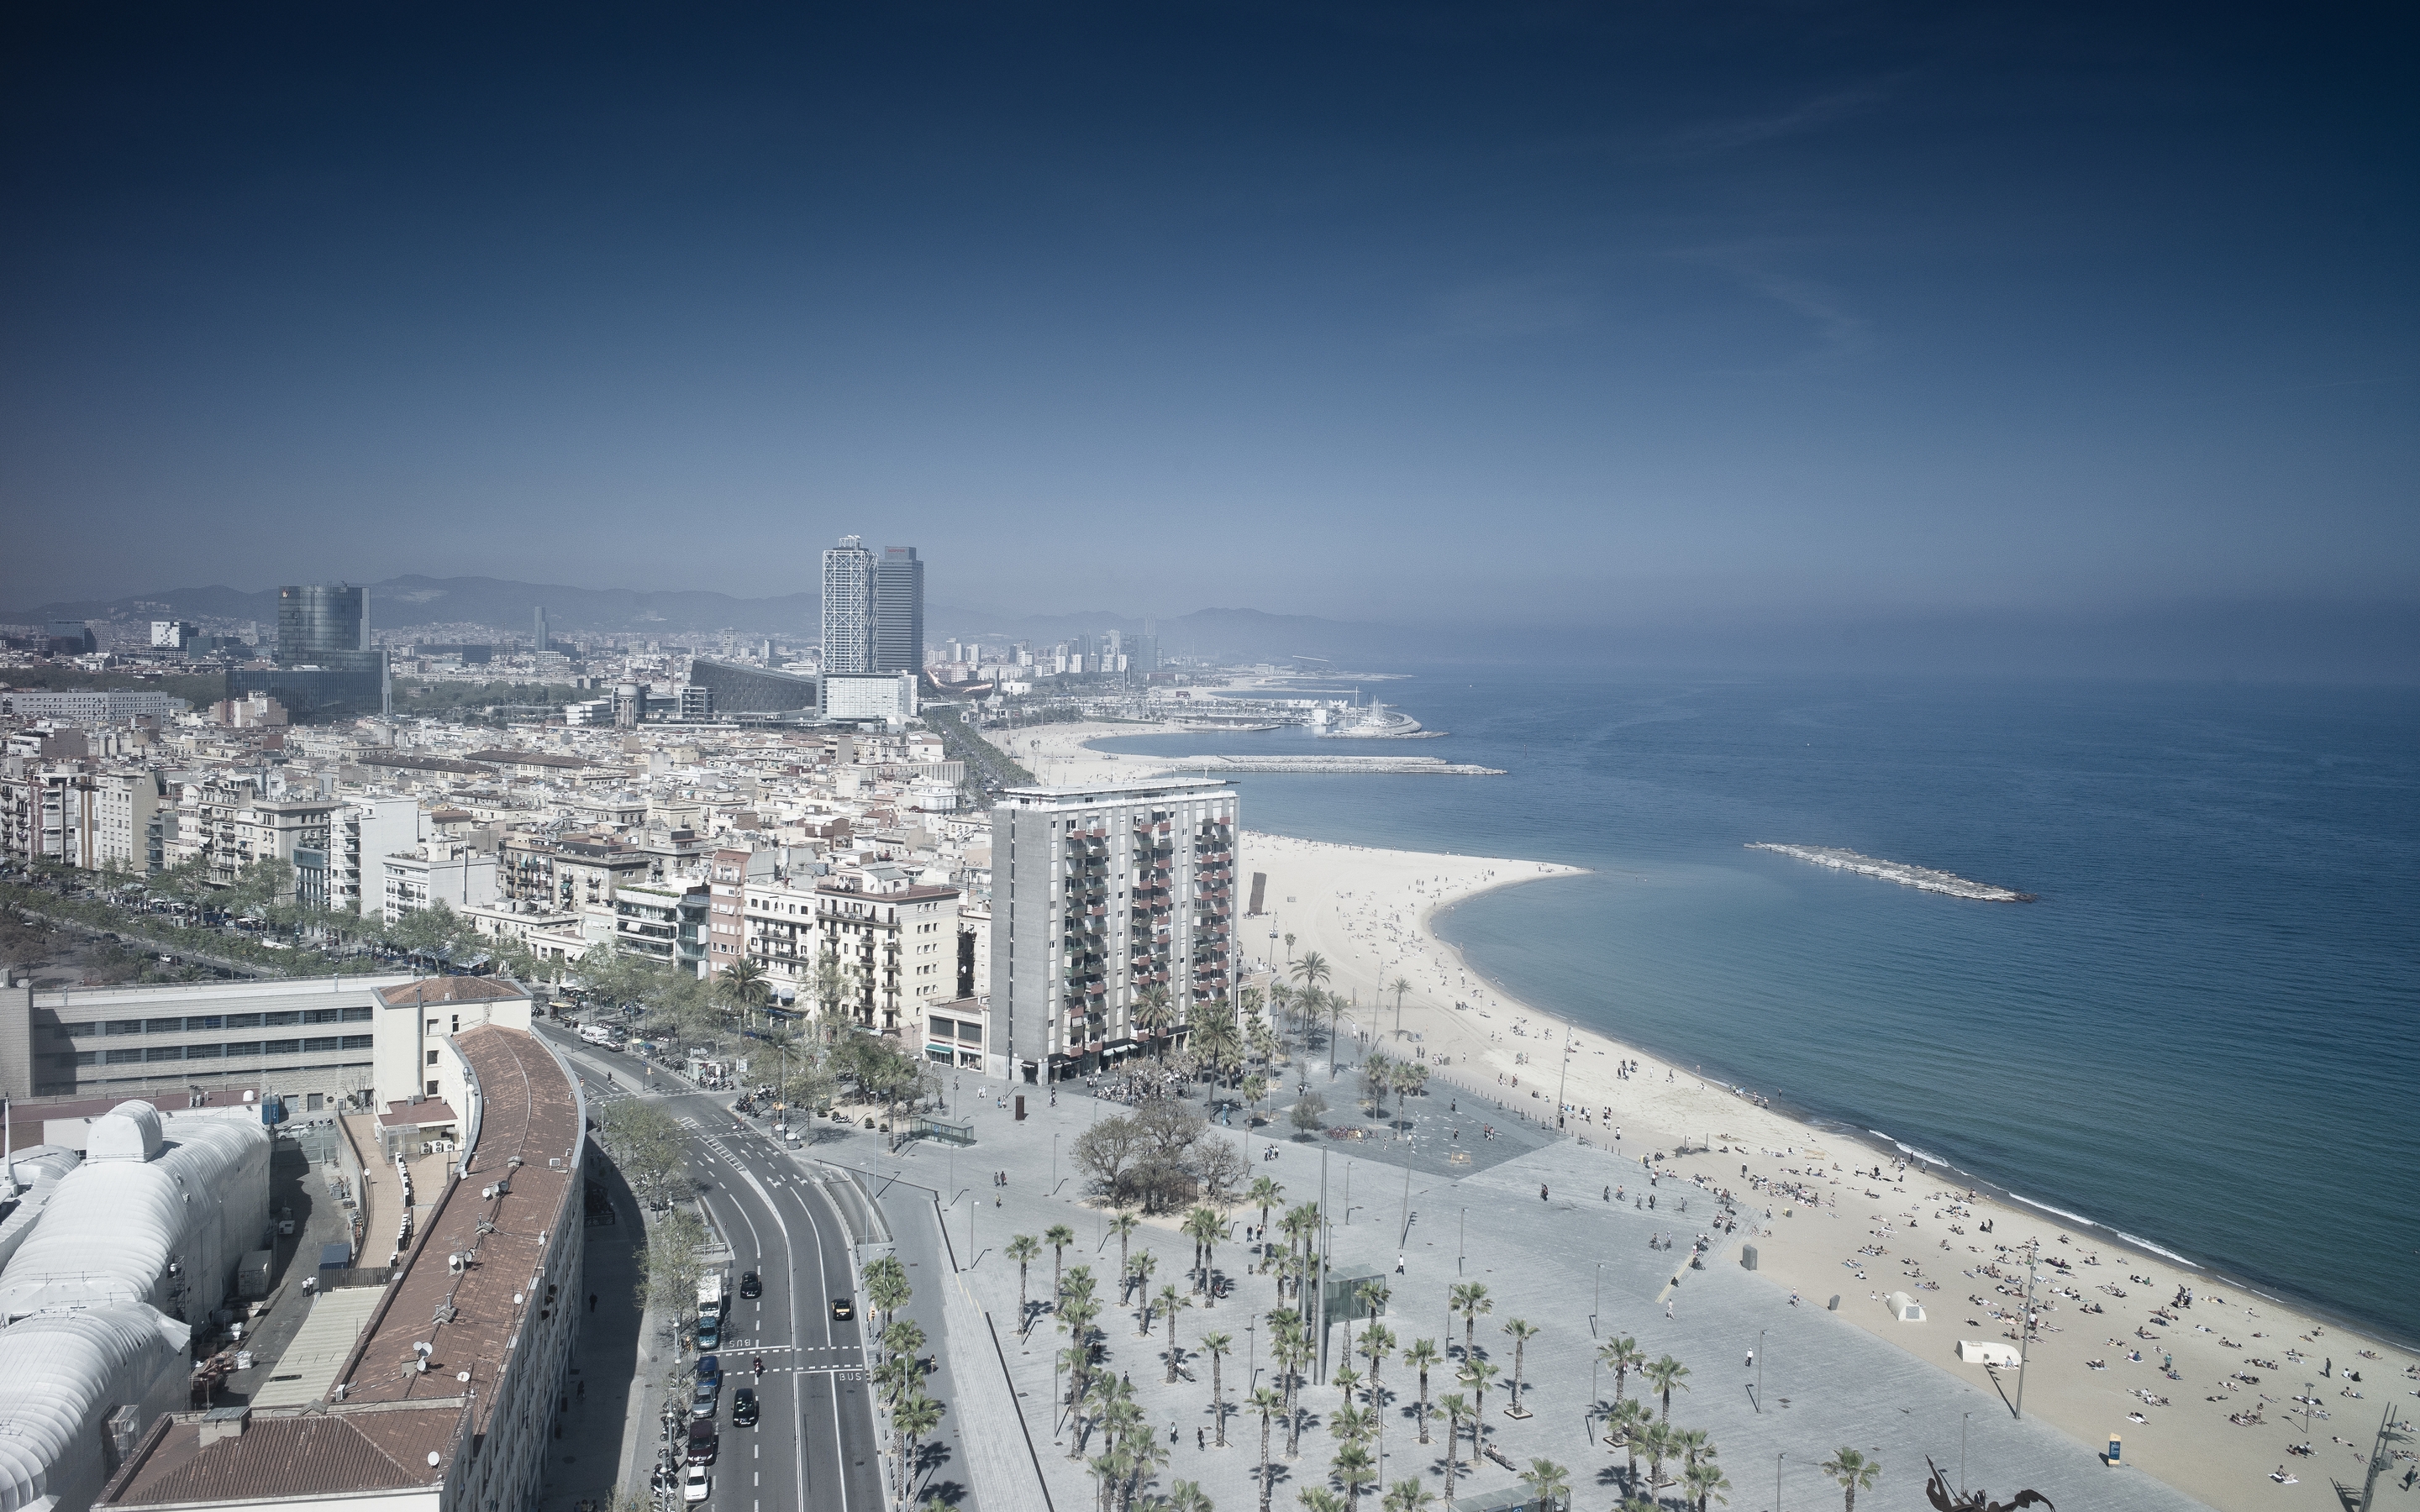 Картинка: Испания, город, Barcelona, панорама, пляж, море, порт, дороги, дома, выcотки, горизонт, небо